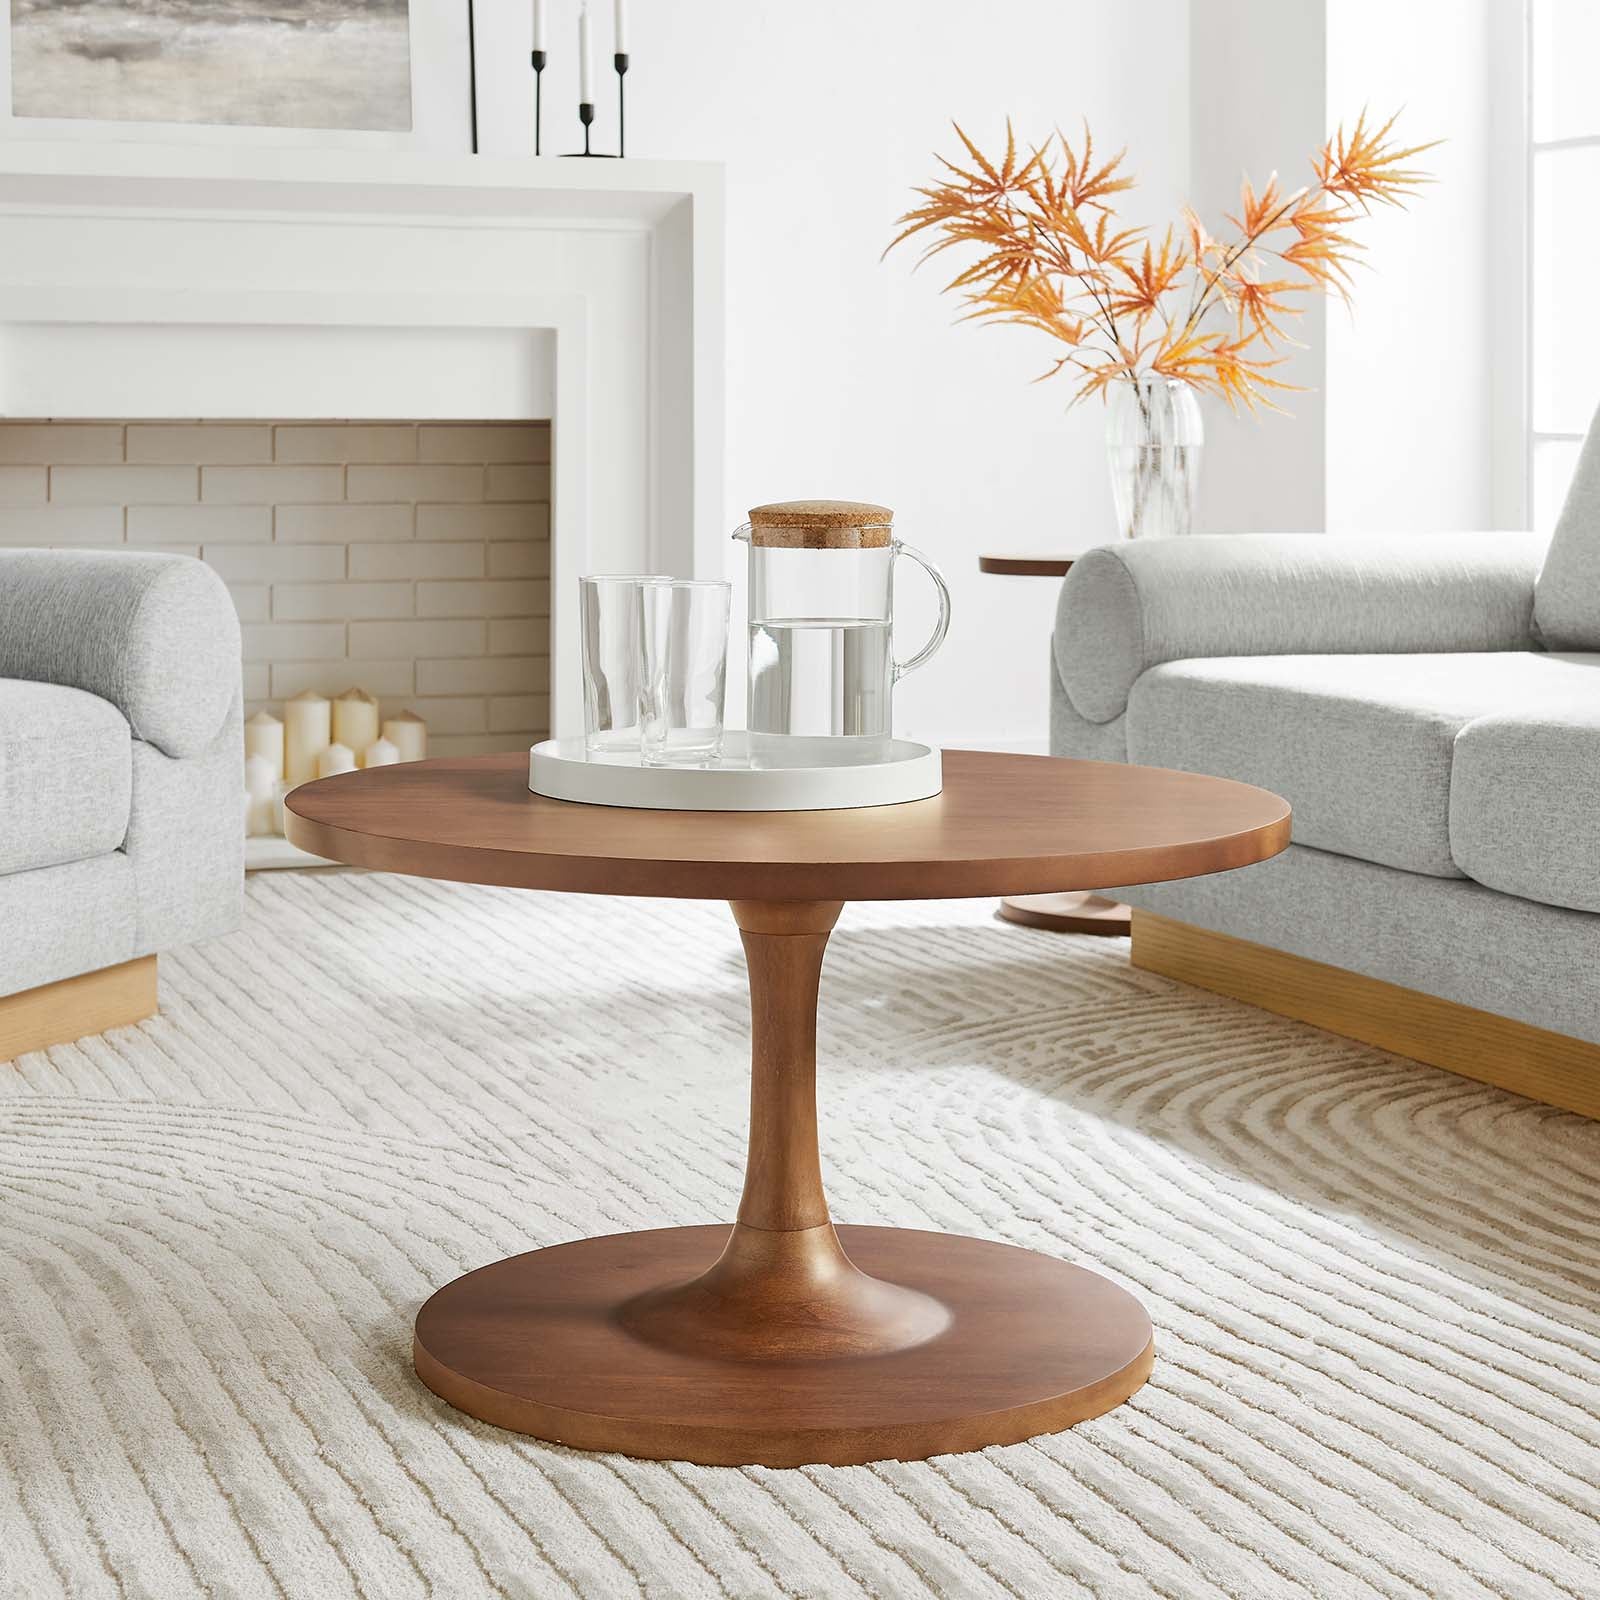 Lina Round Wood Coffee Table - East Shore Modern Home Furnishings